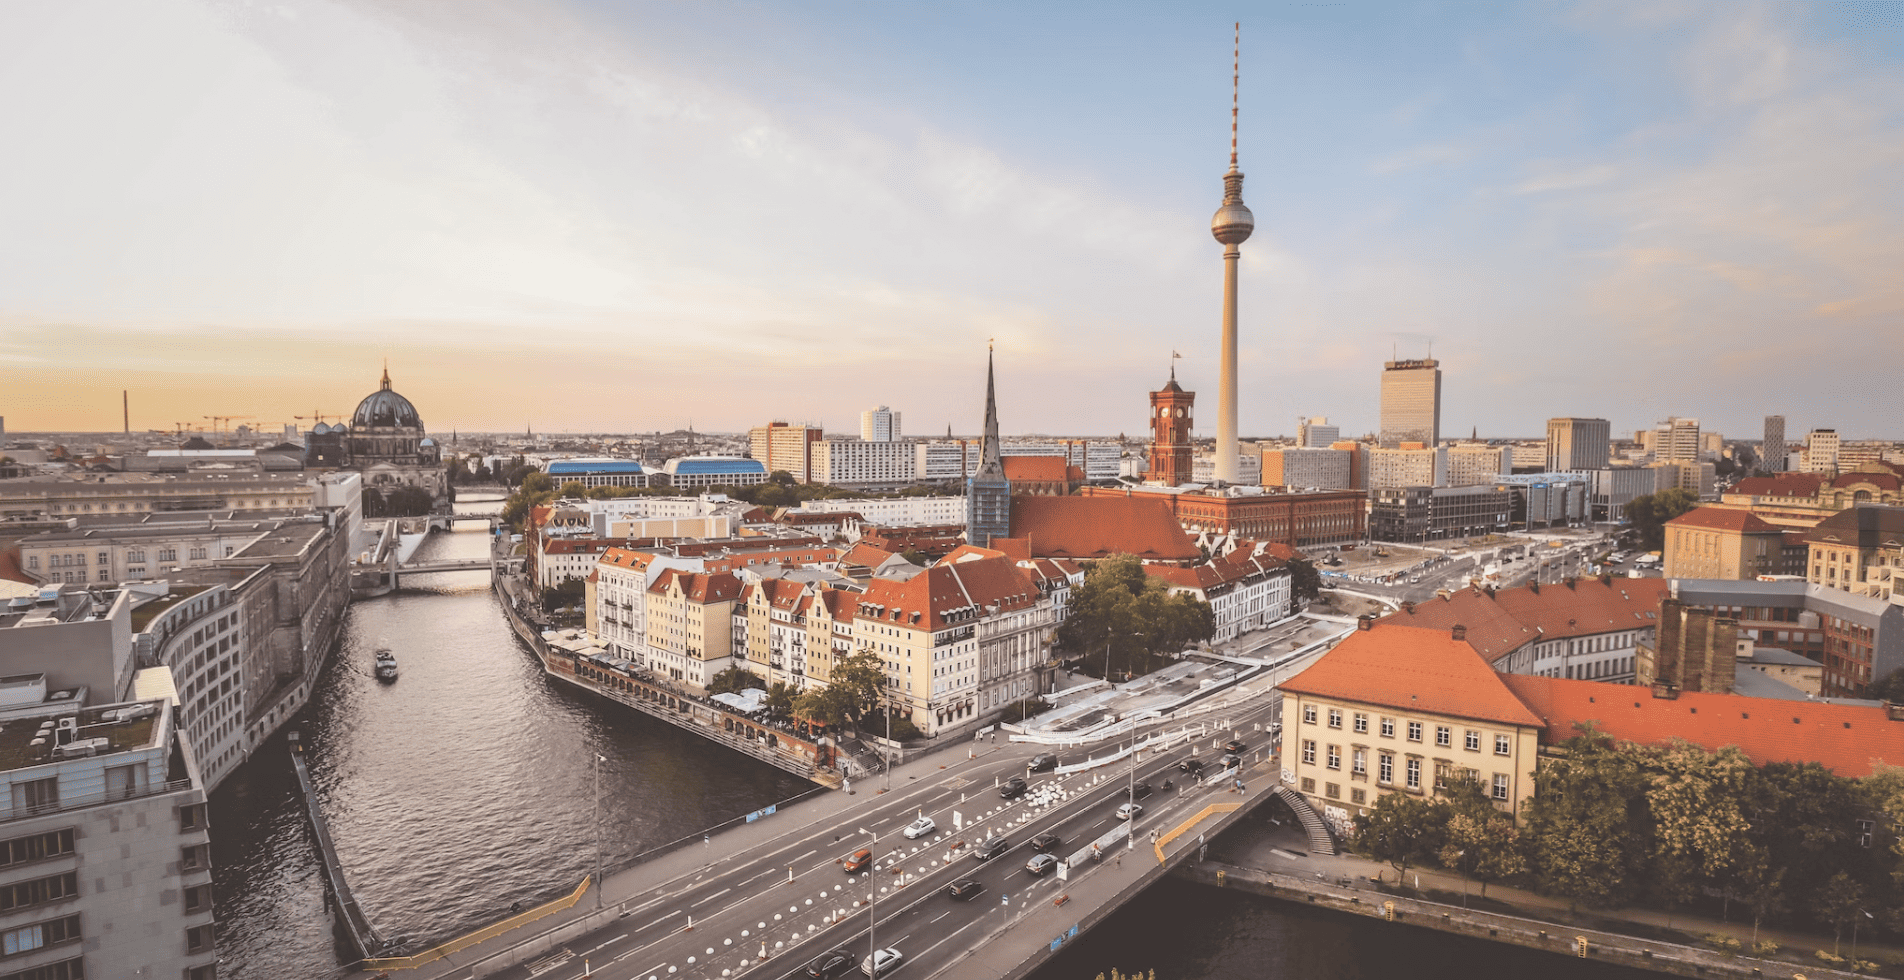 Liste von 3 großen Single Family Offices in Berlin